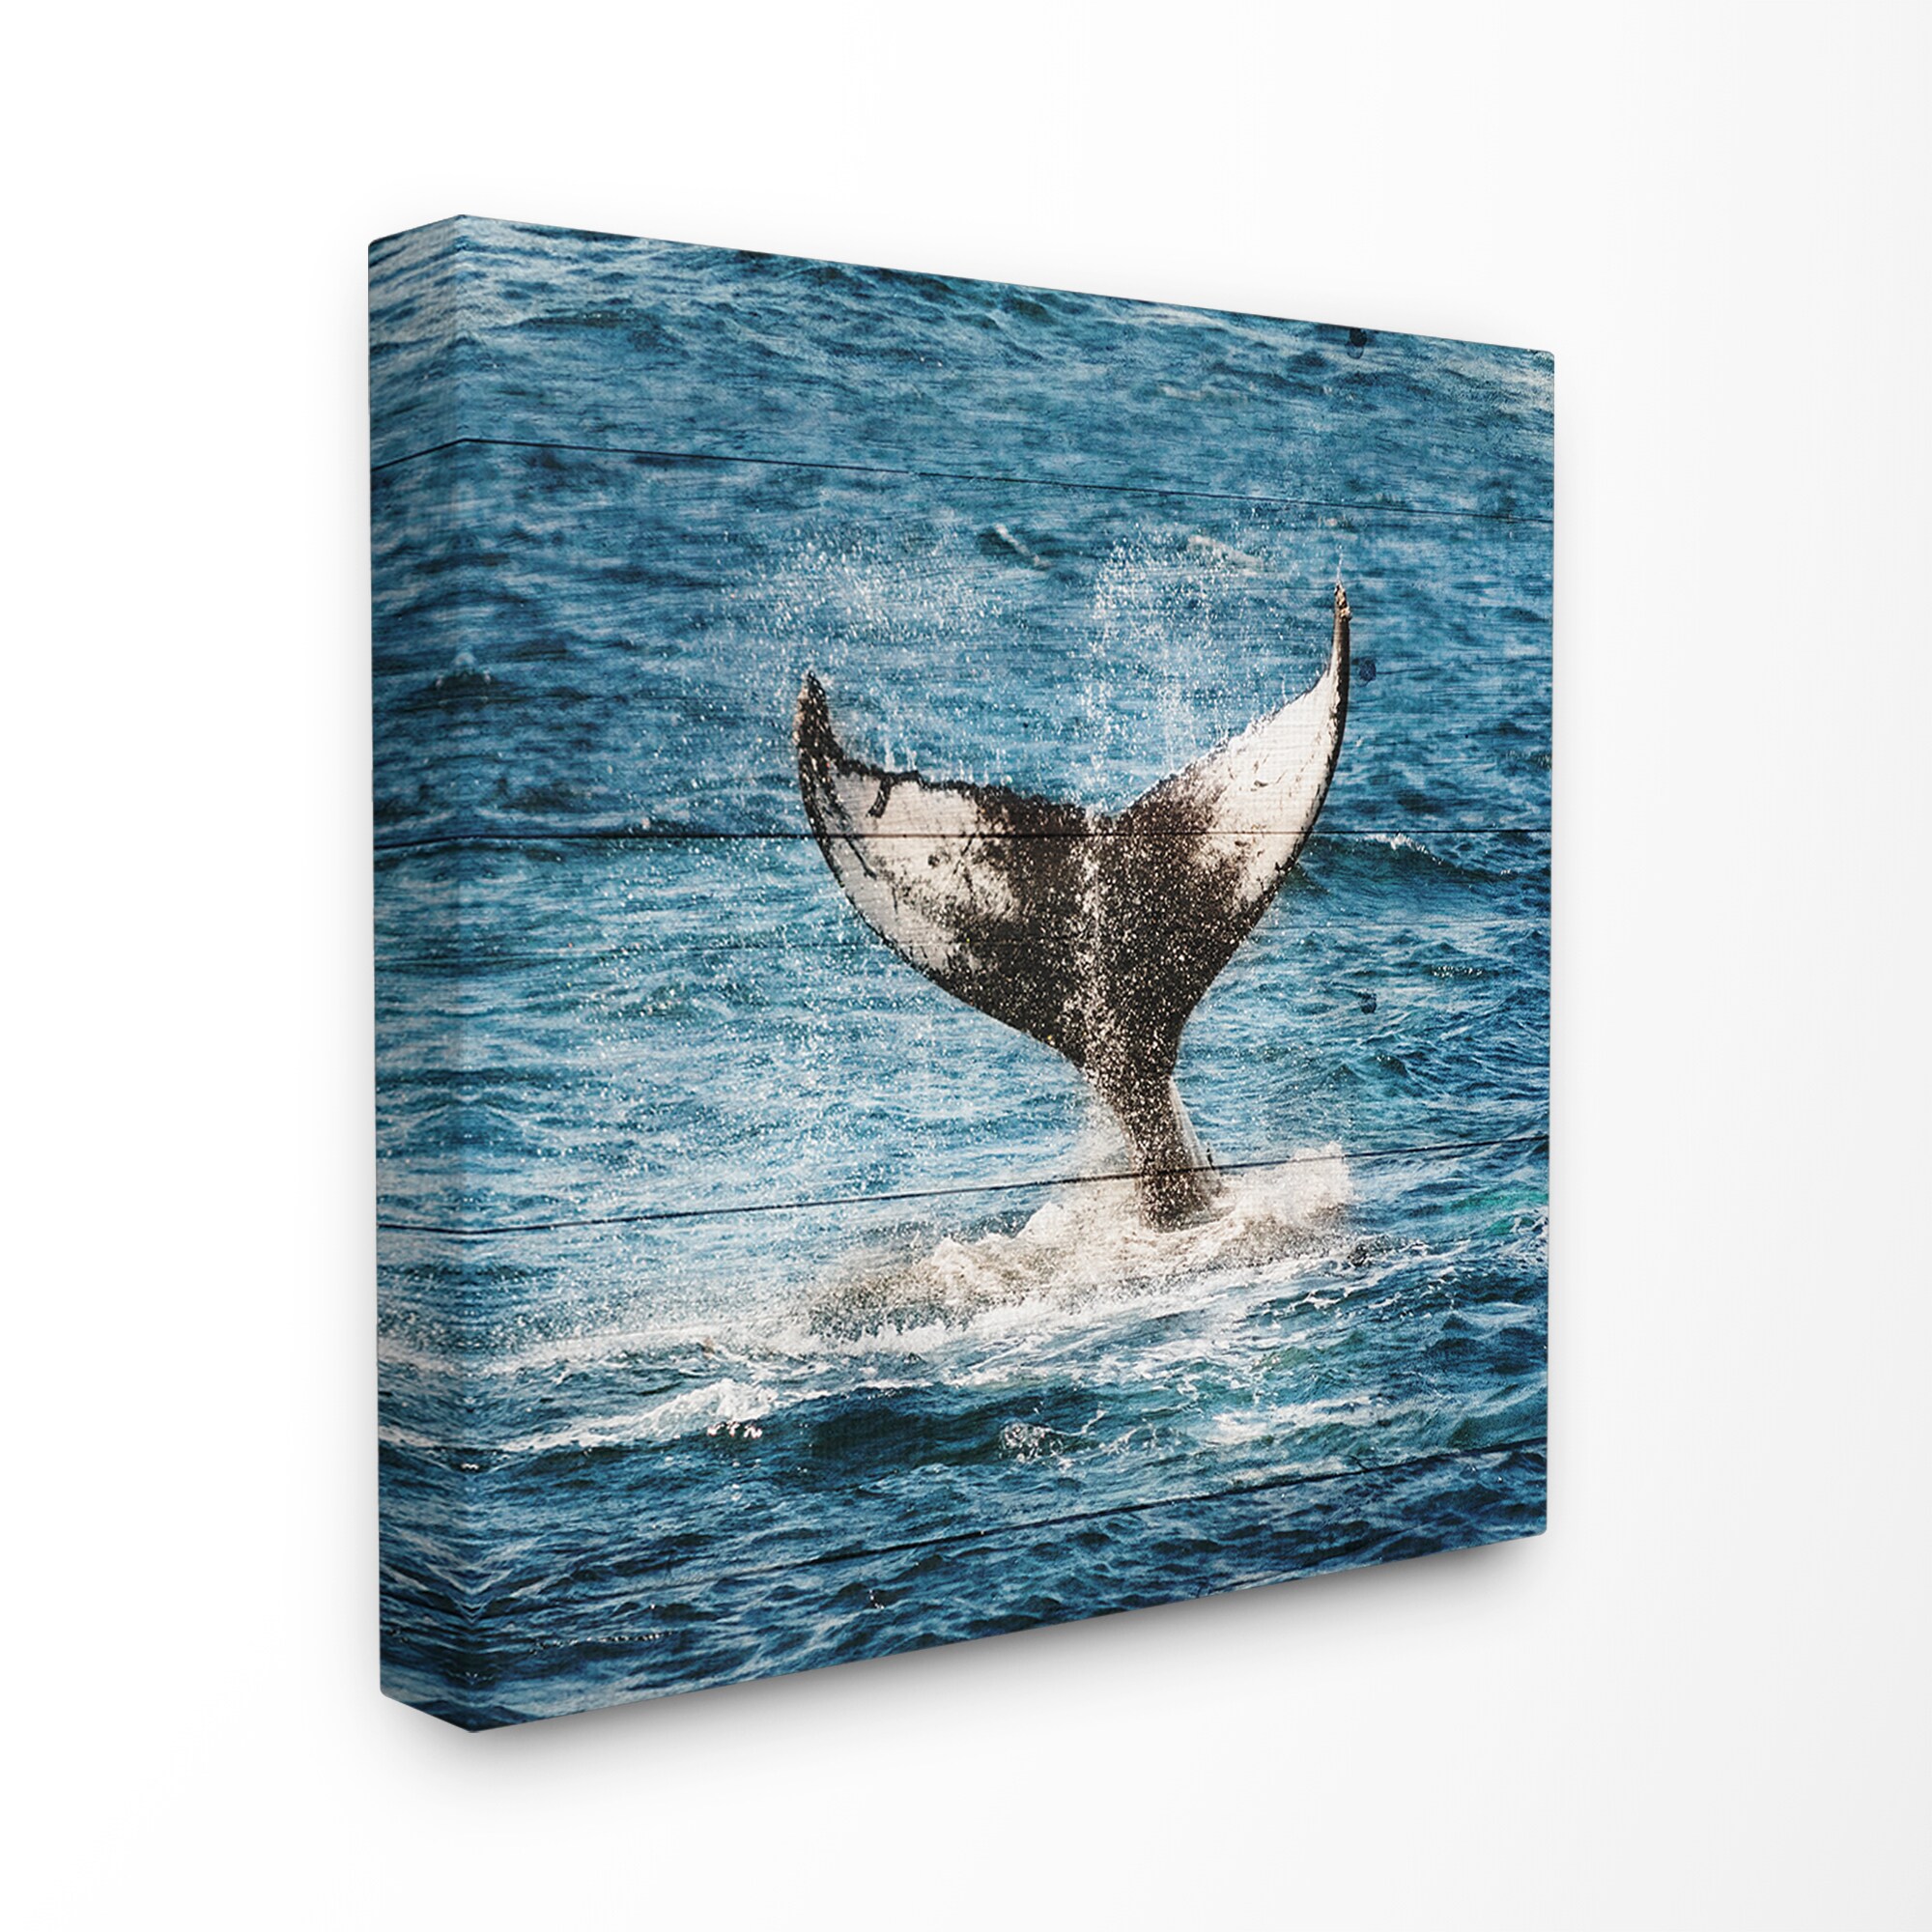 Lush Decor Whale Shower Curtain - Fabric Ocean Fish Animal Print